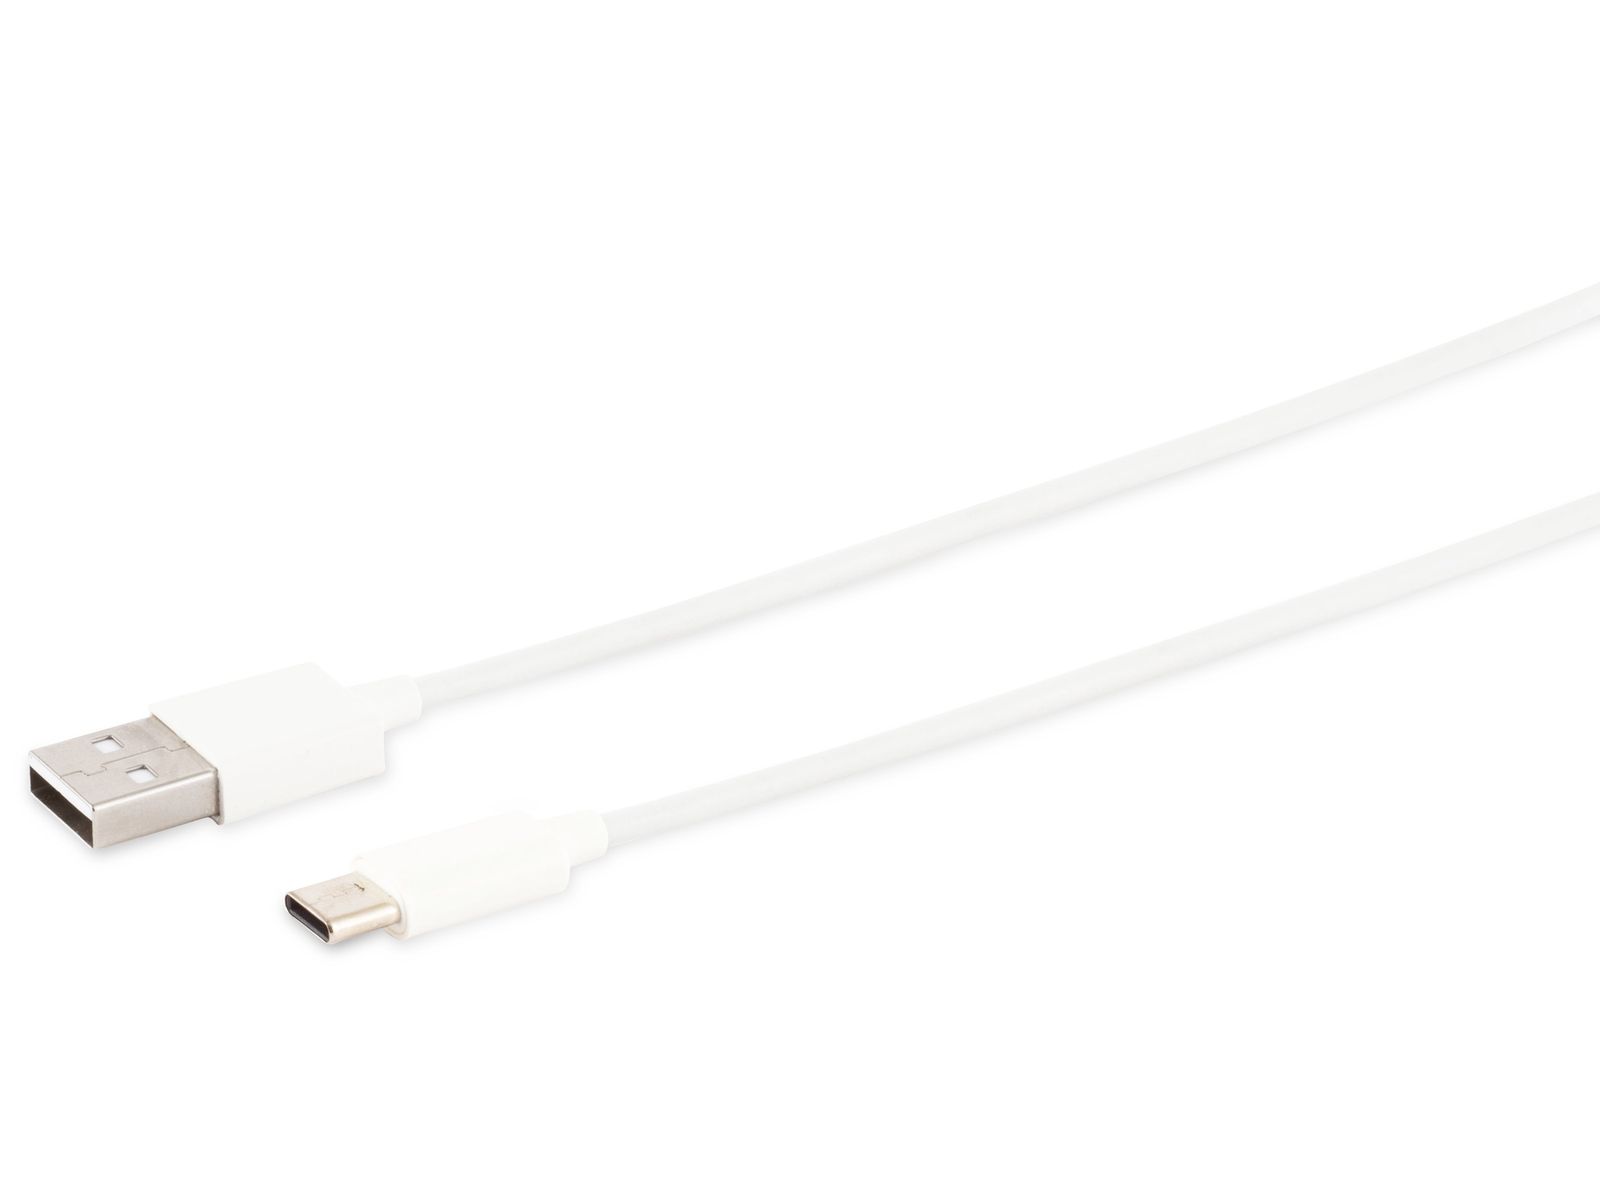 USB-A Ladekabel, USB-C, 2.0, ABS, weiß, 0,5 m